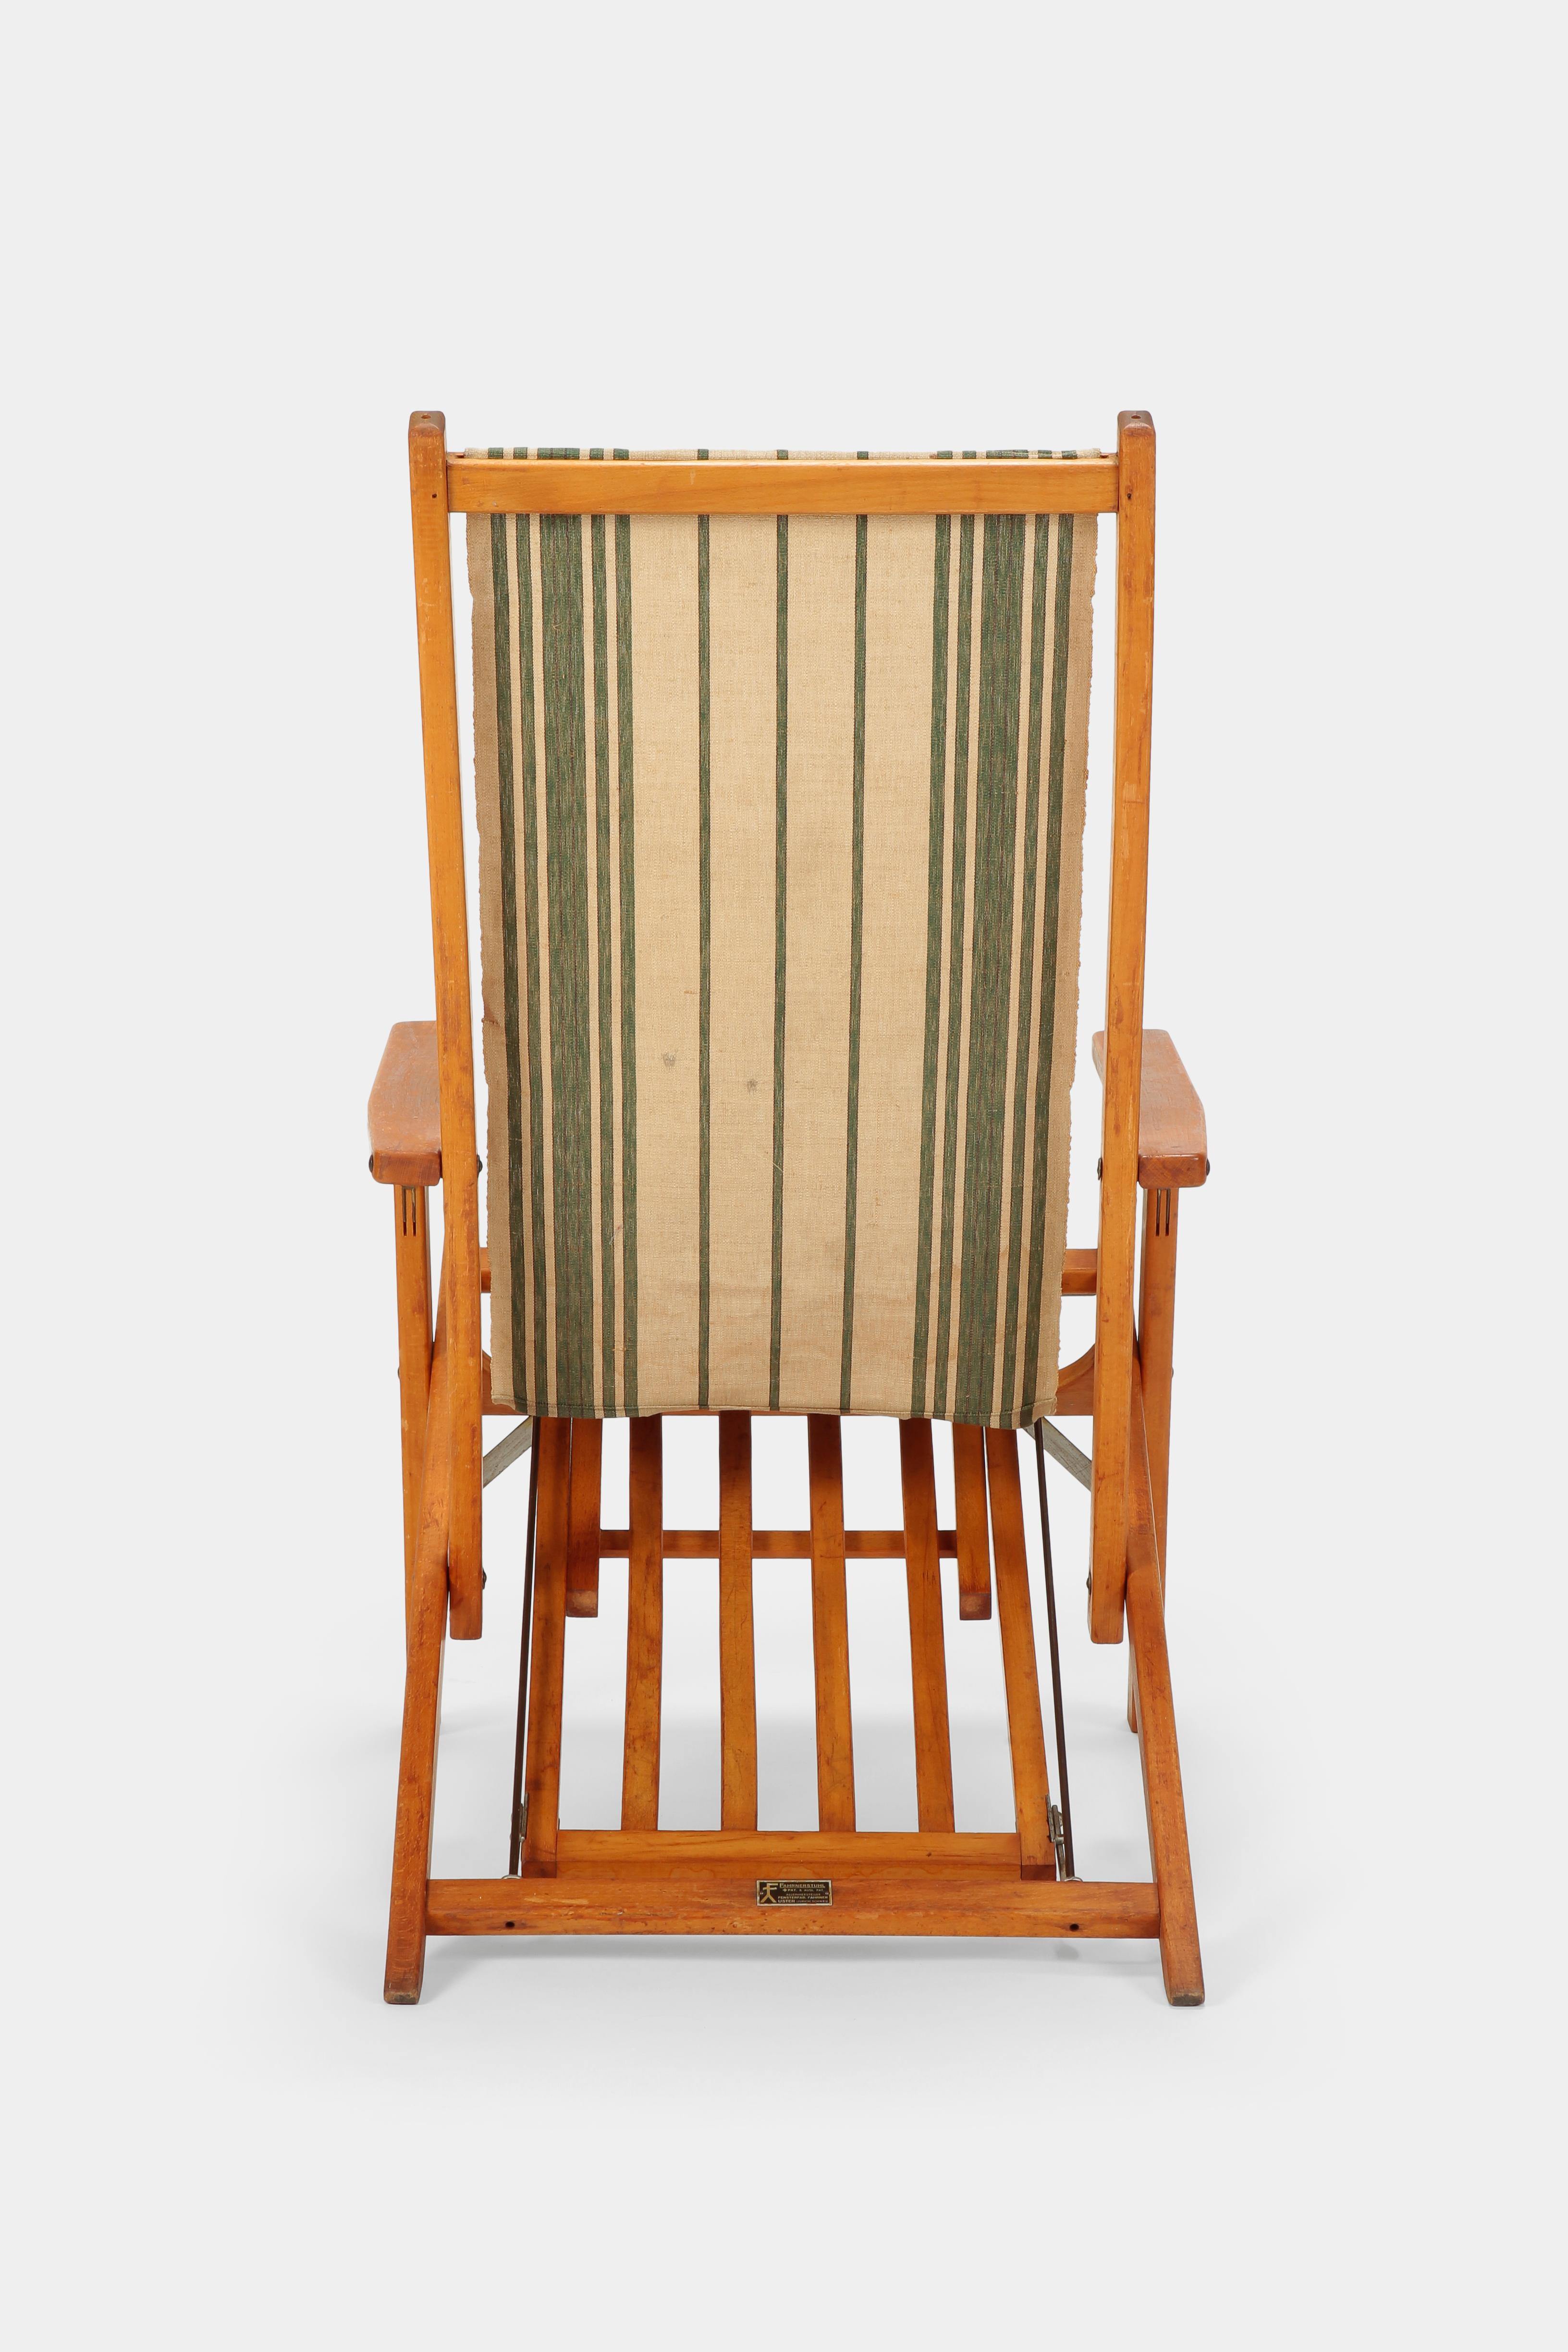 Fritz Fahrner Folding Chair, 1930s 4